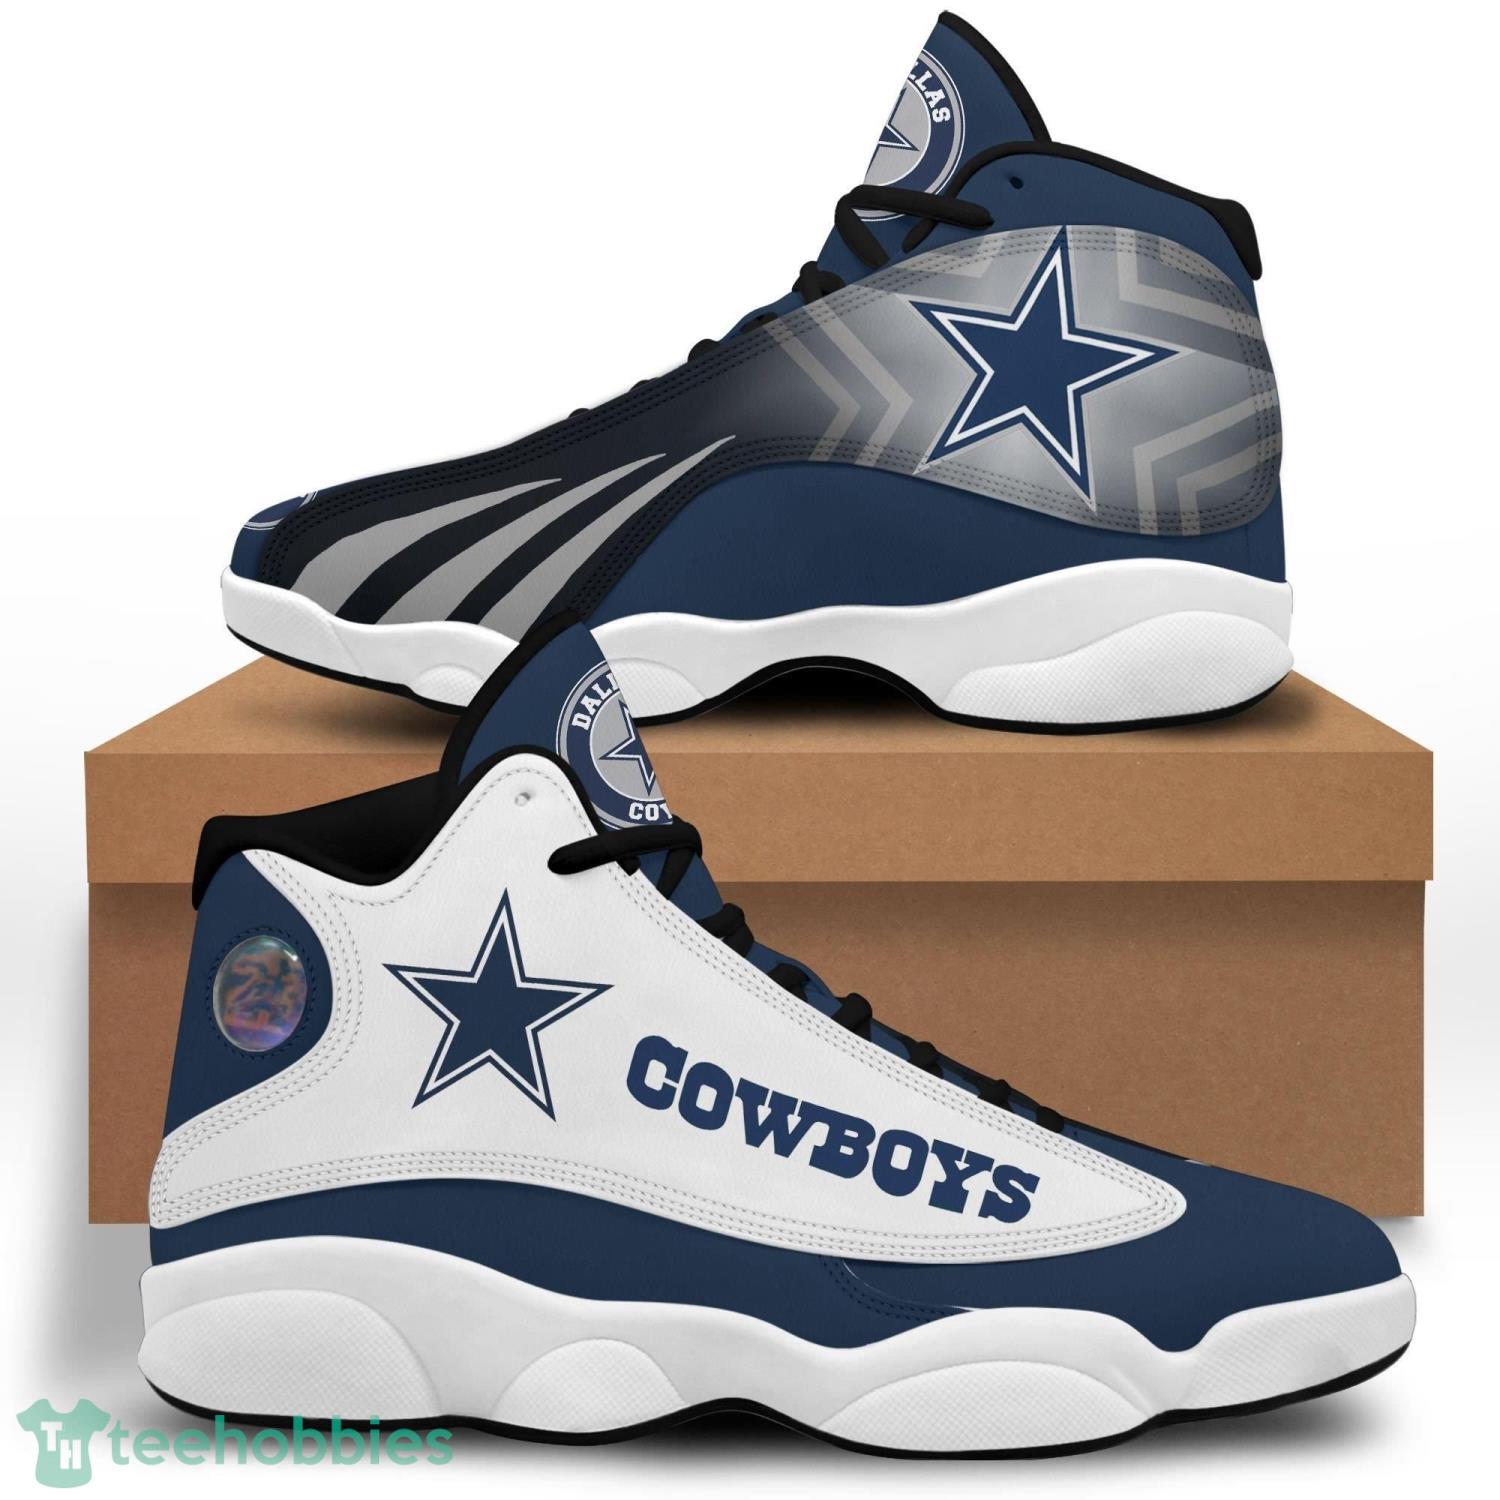 DaIIas Cowboys Team Air Jordan 13 Shoes Sneakers For Fans Product Photo 1